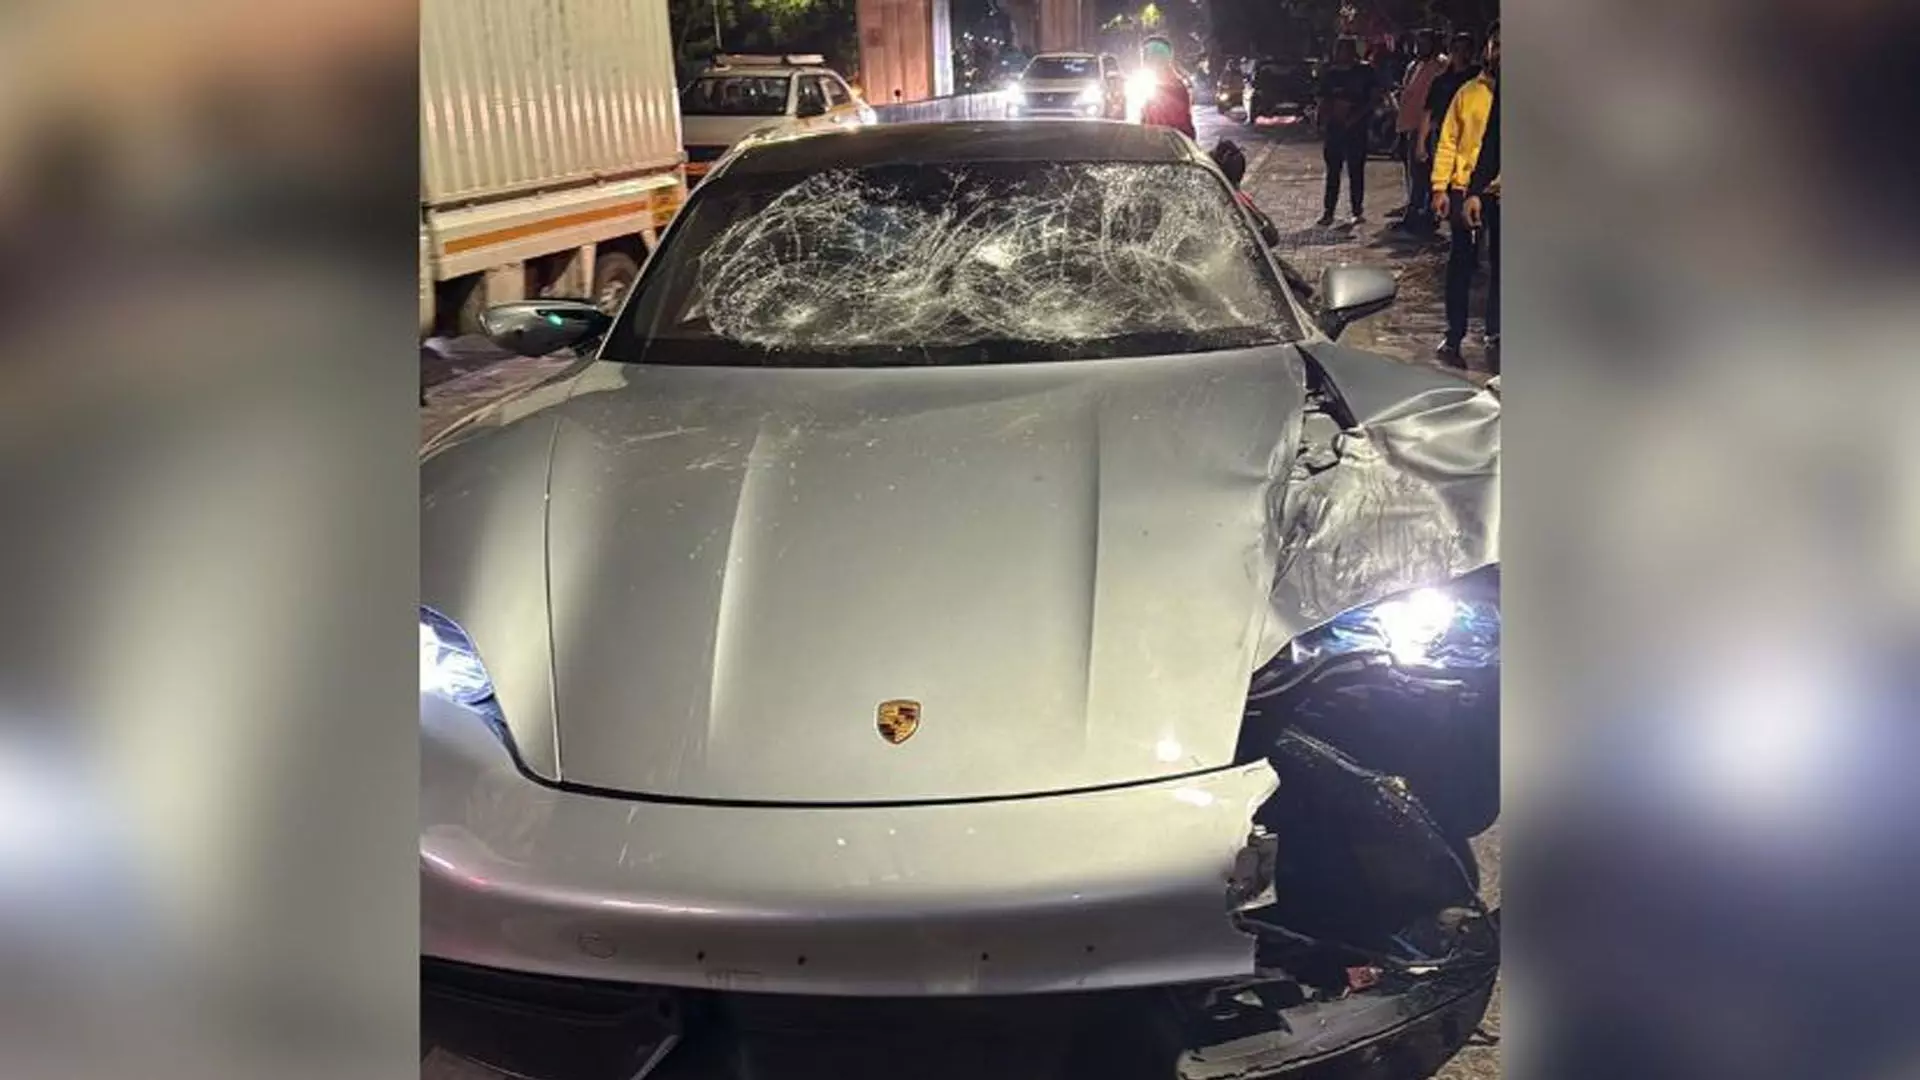 Porsche car accident: किशोर चालक को राहत नहीं, उसकी निगरानी गृह रिमांड 25 जून तक बढ़ाई गई